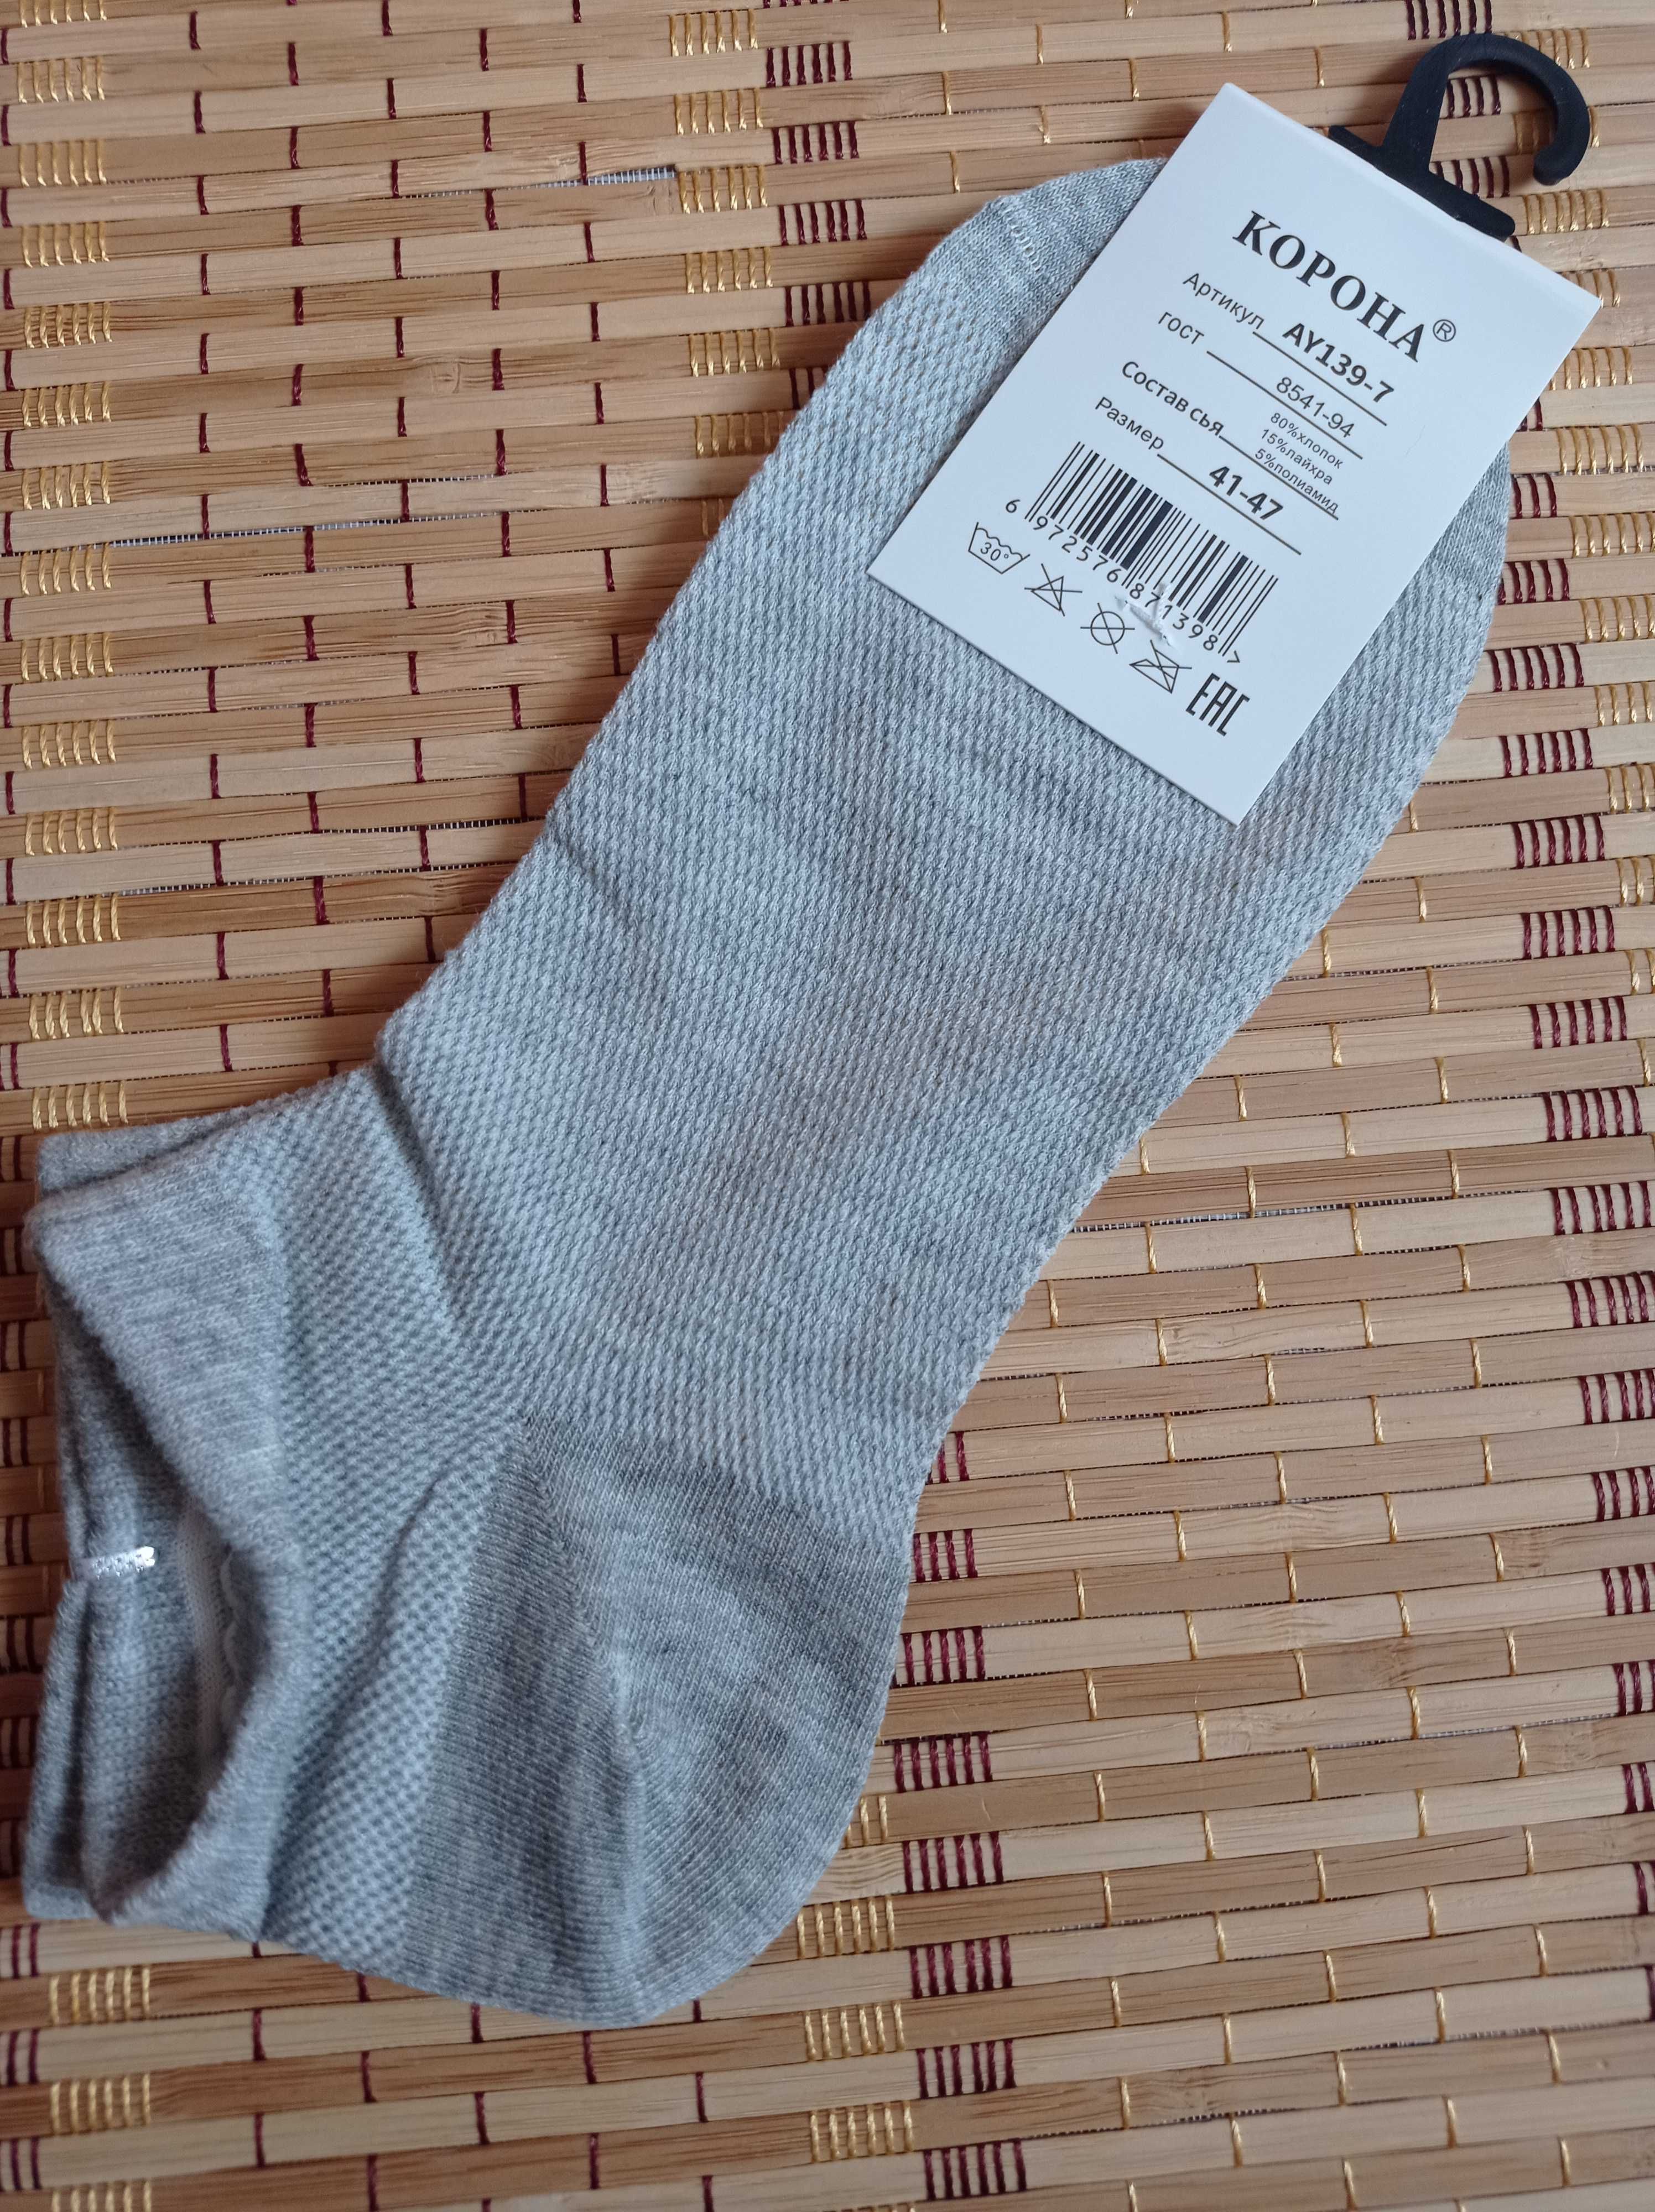 Шкарпетки преміум класу Корона бавовна носки